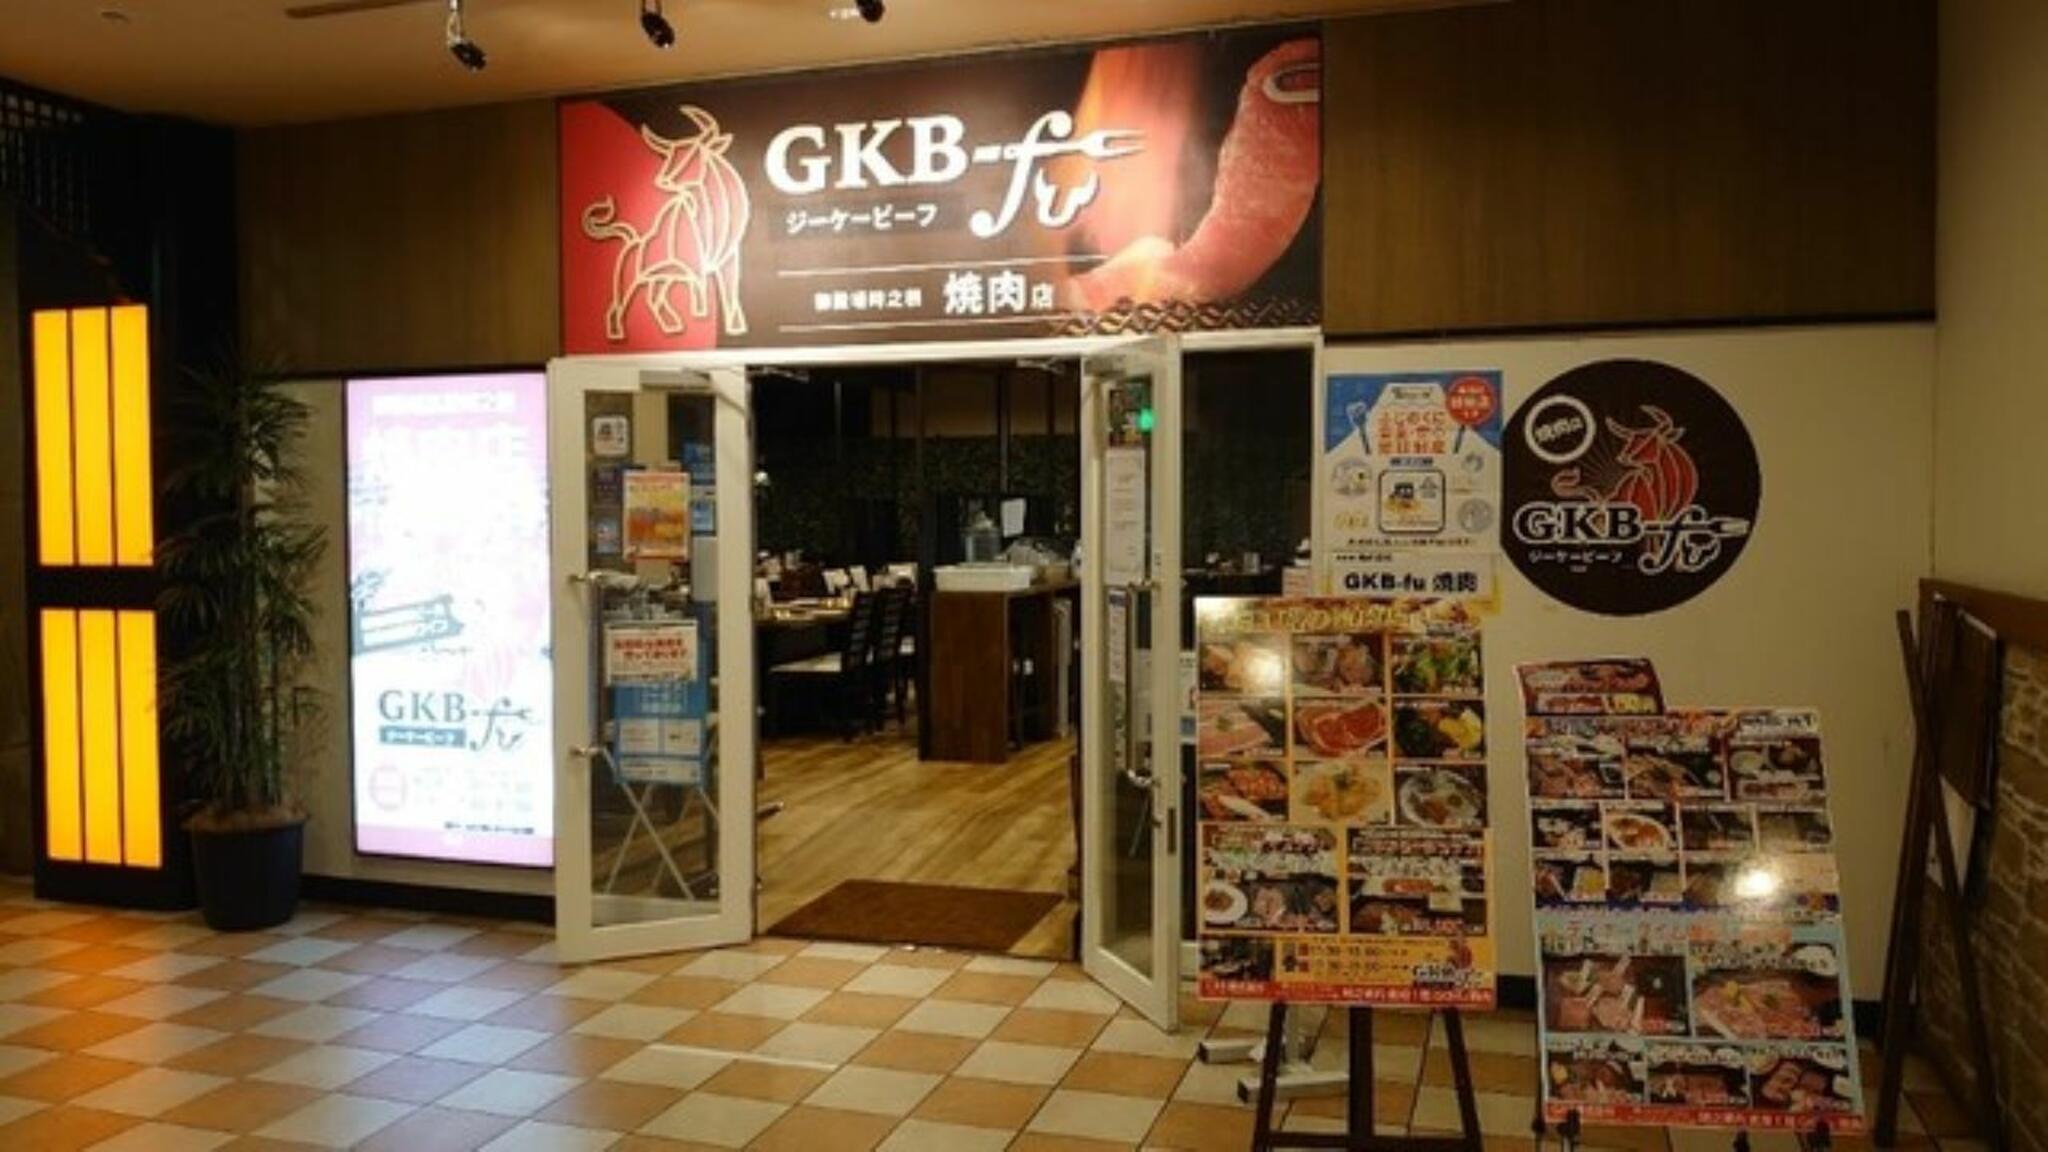 GKB-fu焼肉の代表写真2